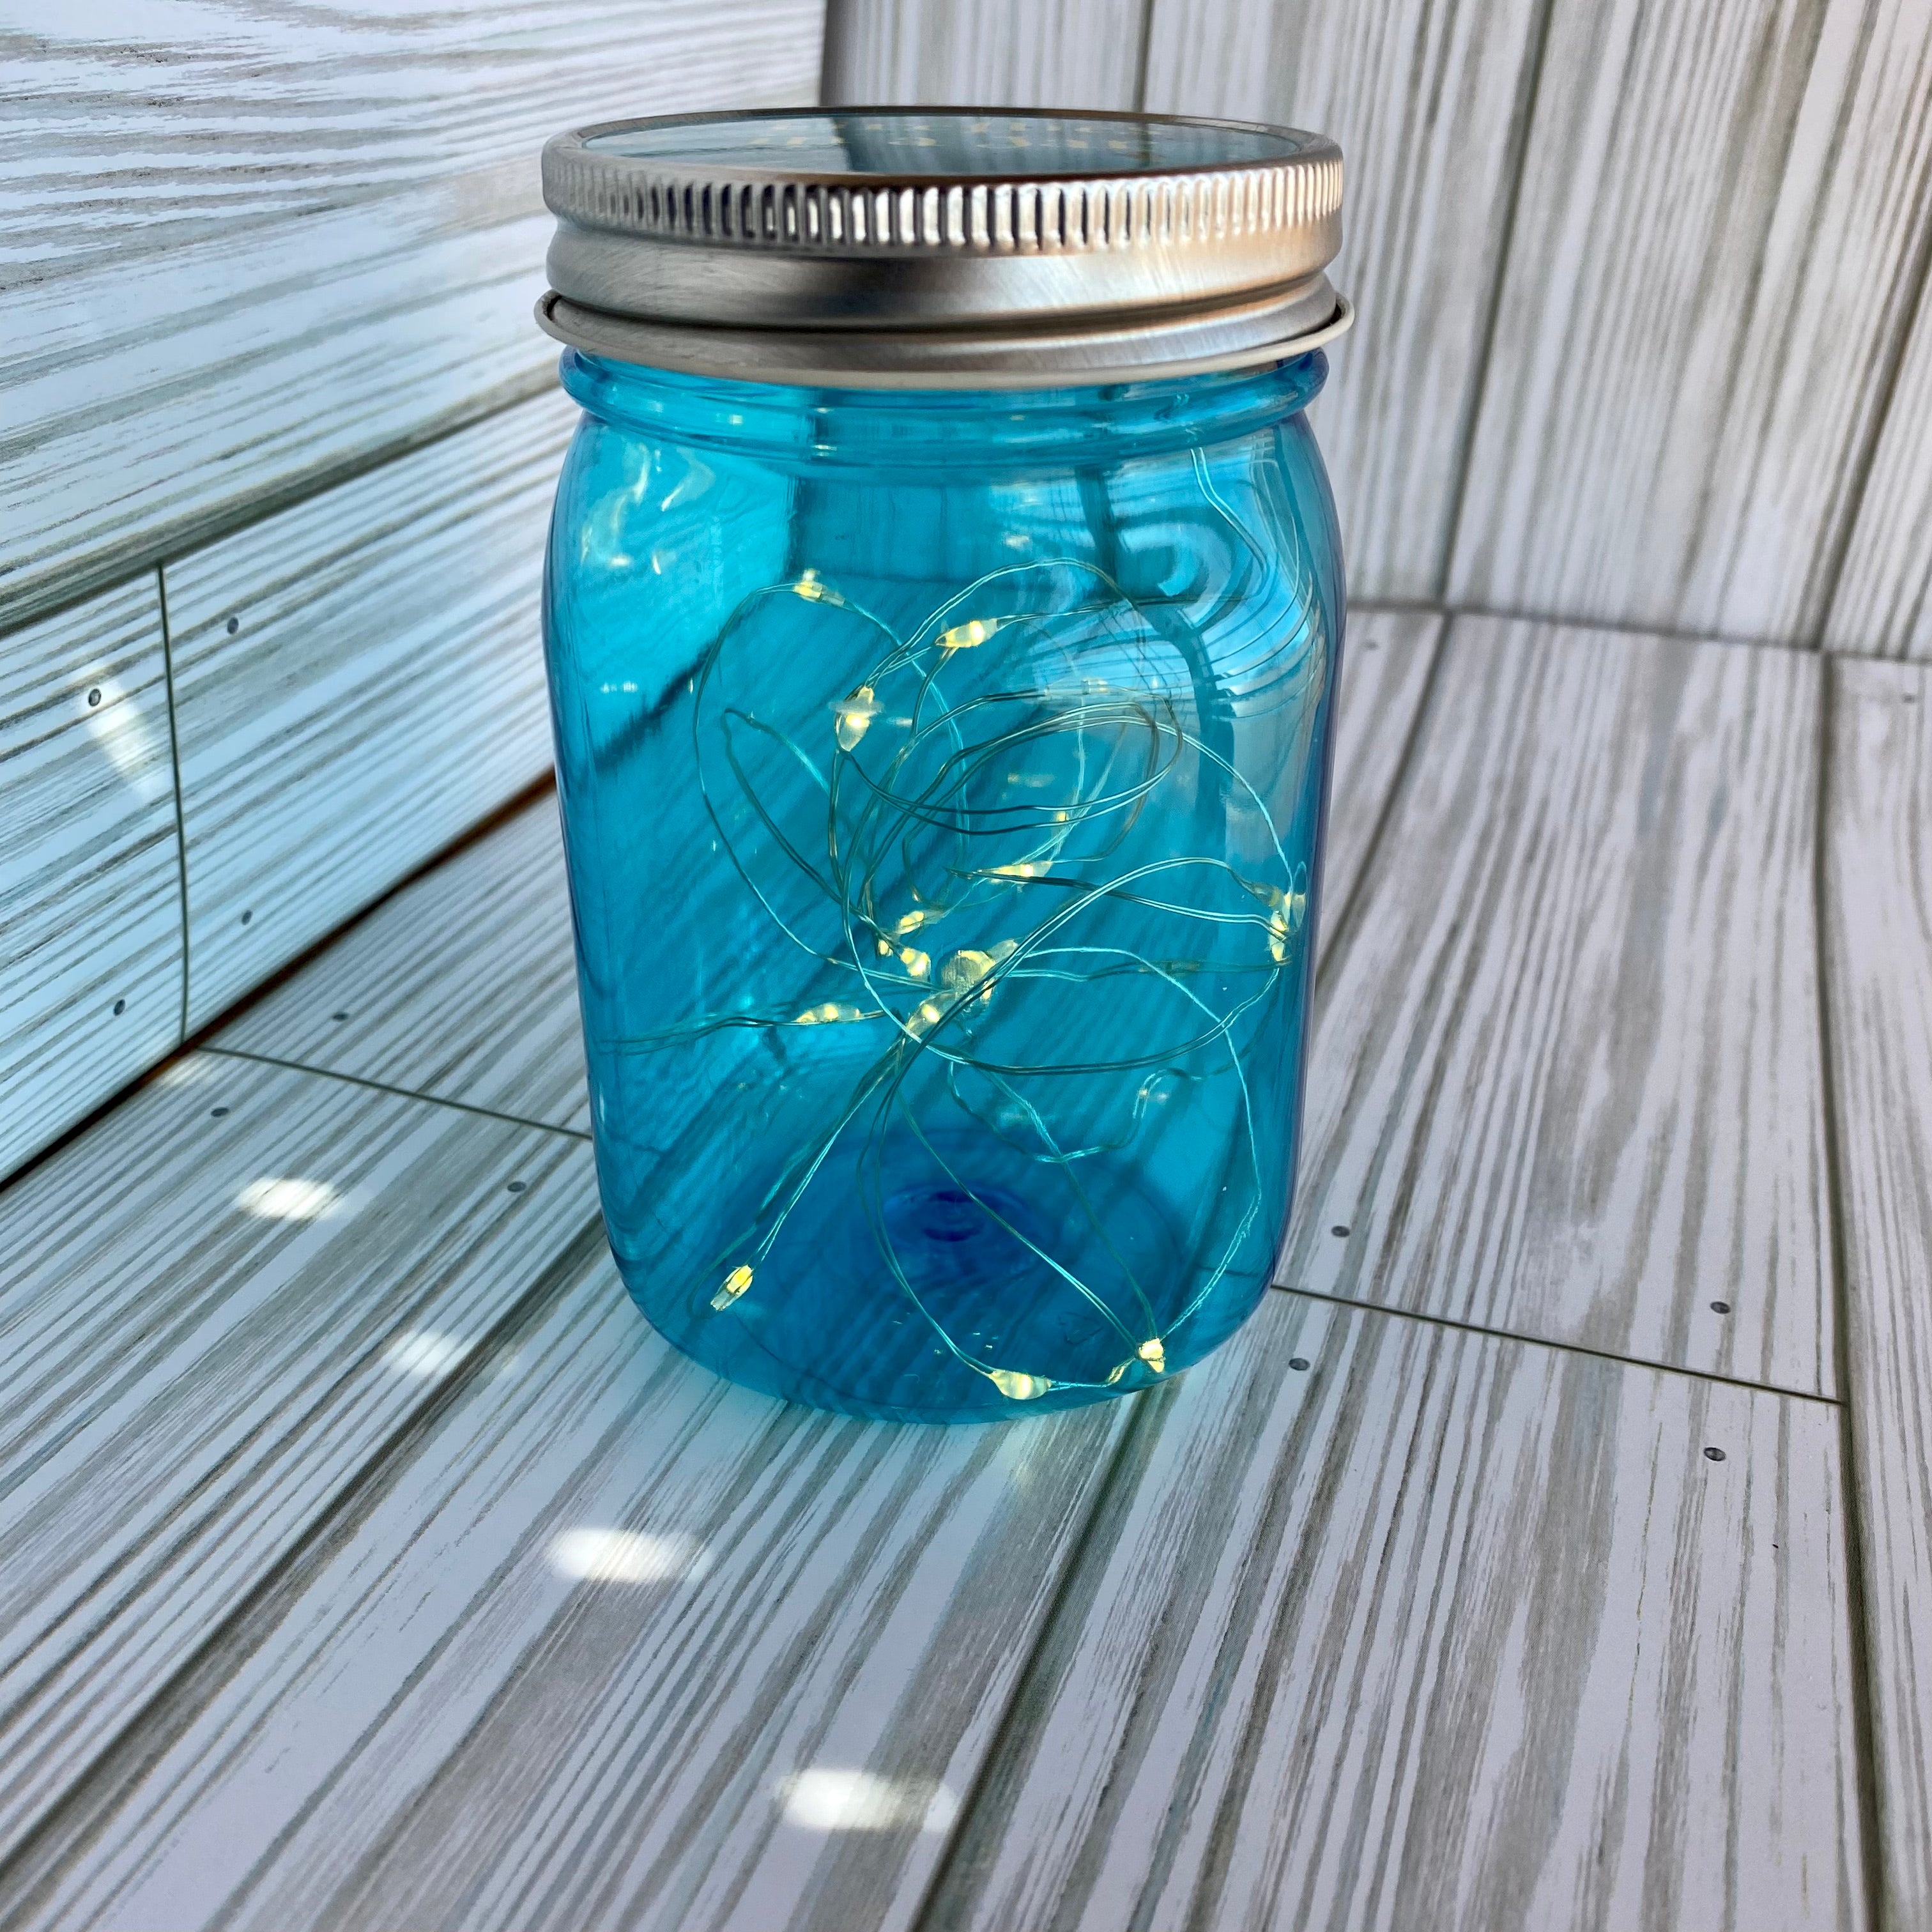 silicone jar opener - catching fireflies